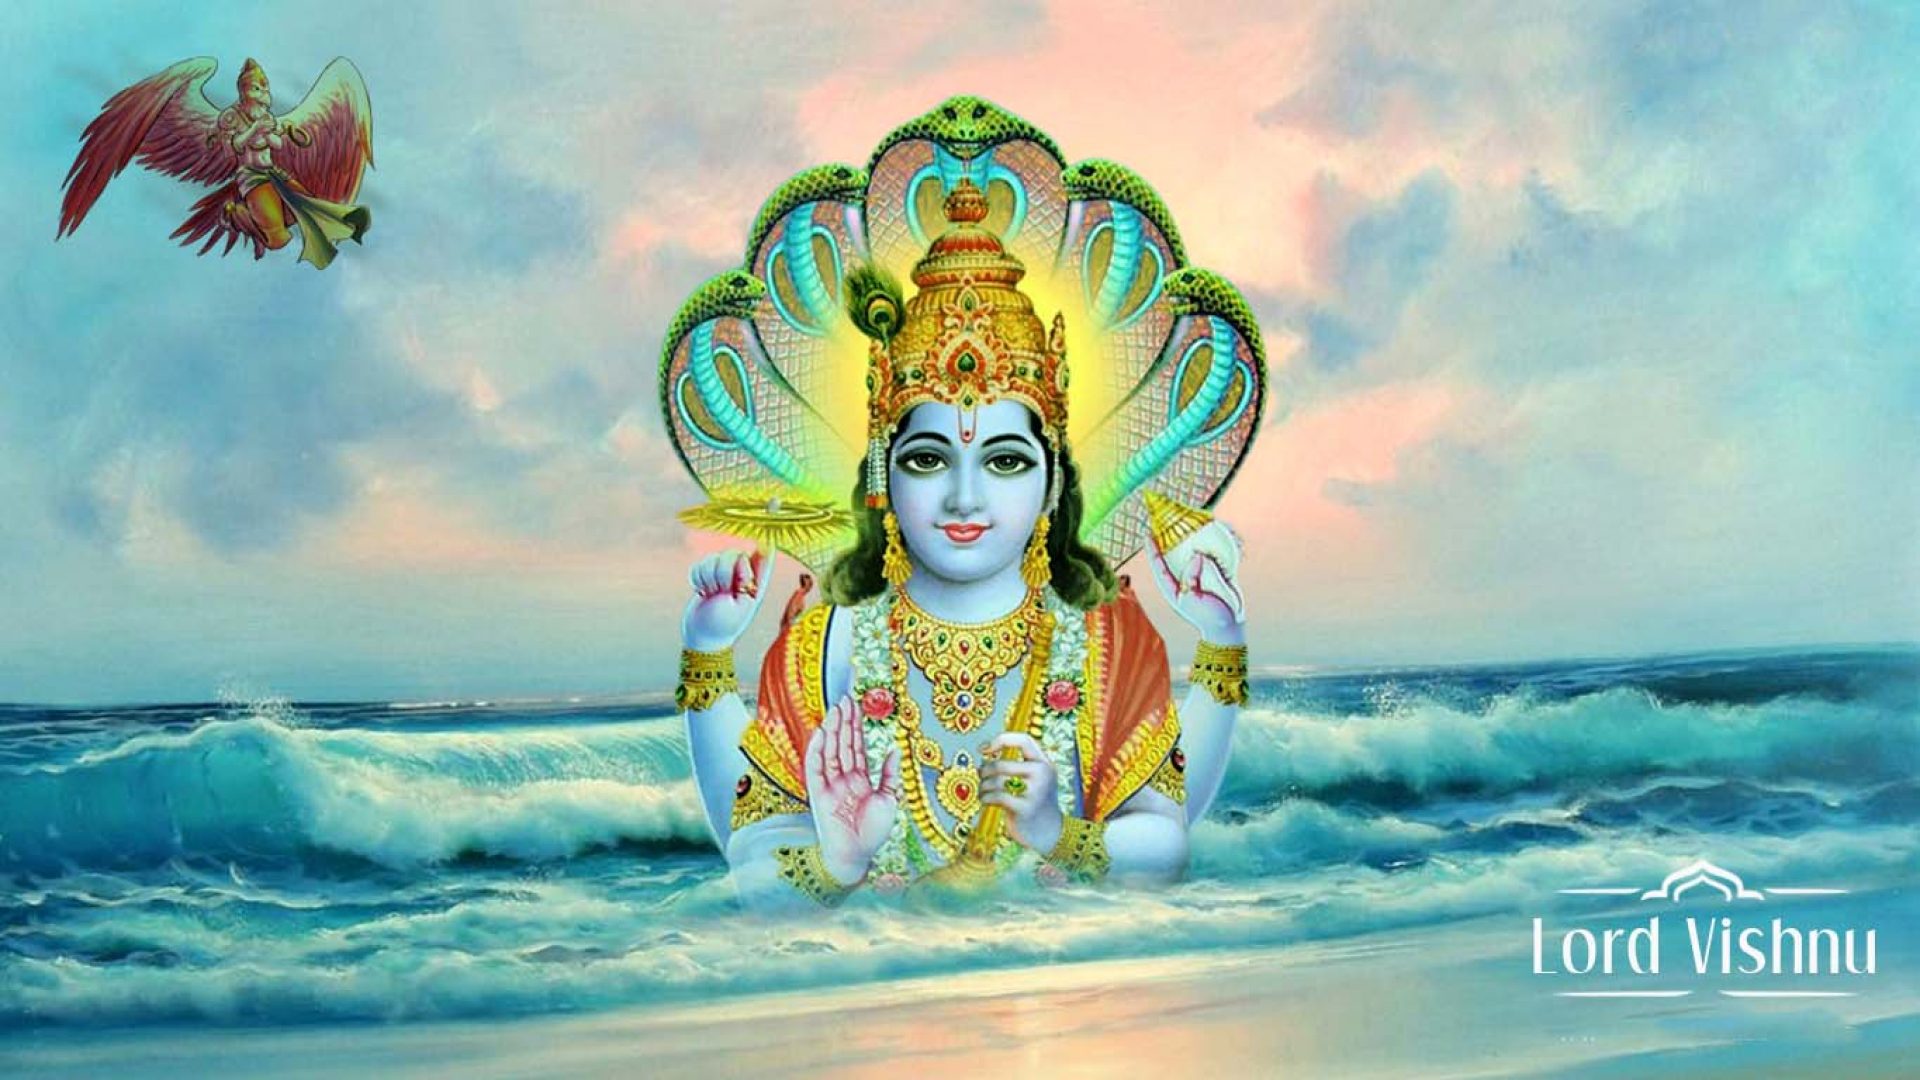 Lord Vishnu Images Hd | Hindu Gods and Goddesses